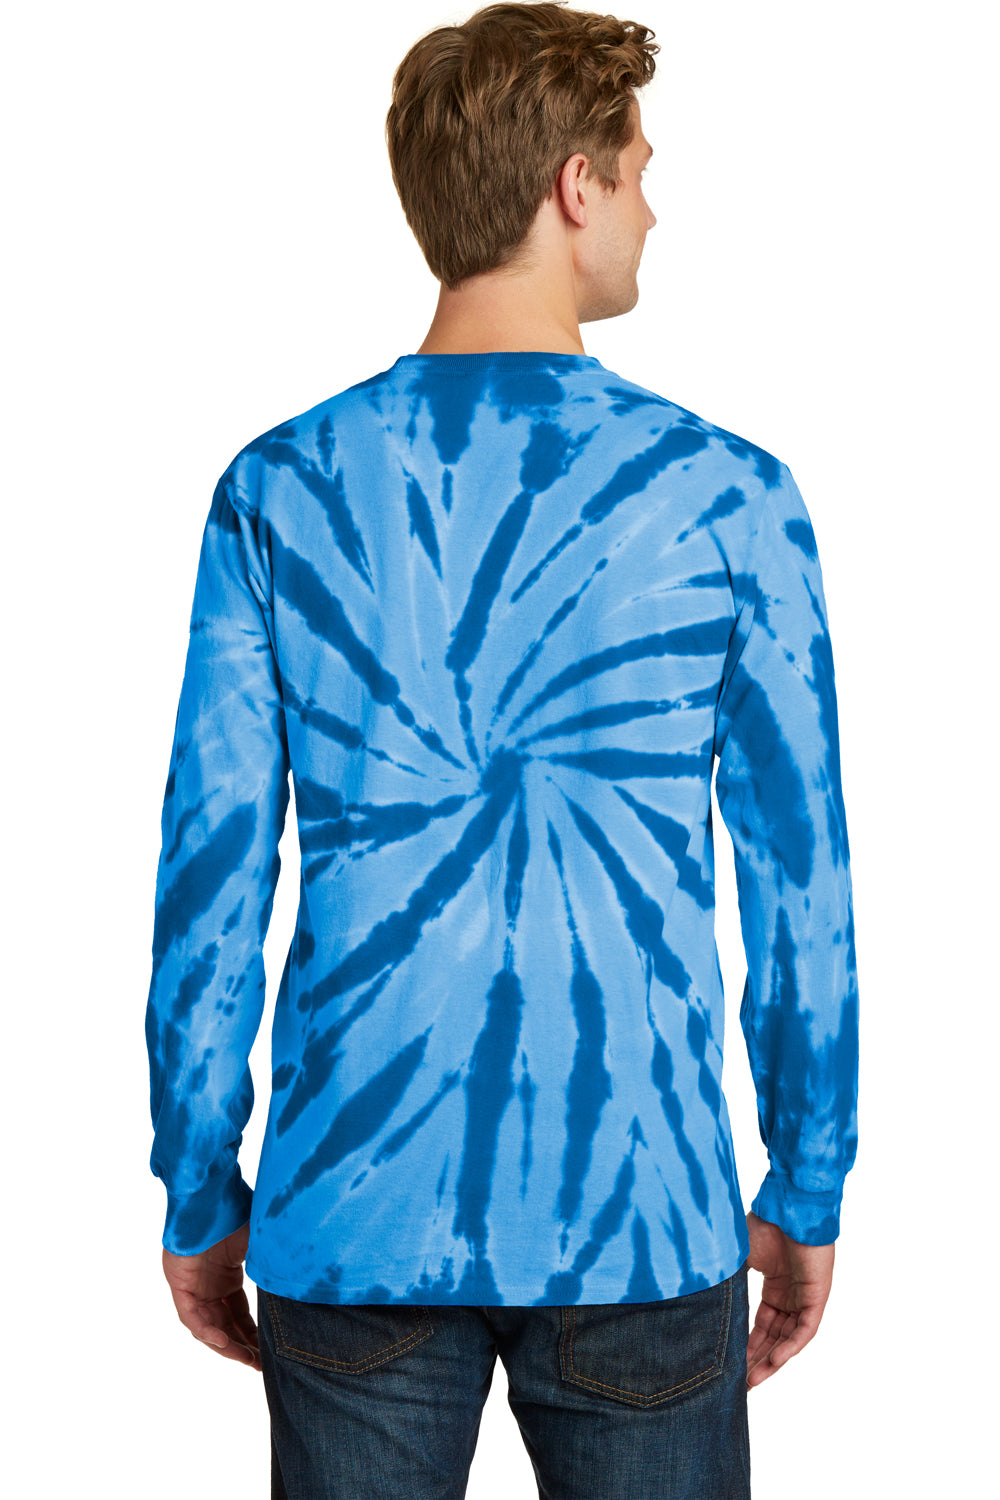 Port & Company PC147LS Mens Tie-Dye Long Sleeve Crewneck T-Shirt Royal Blue Back